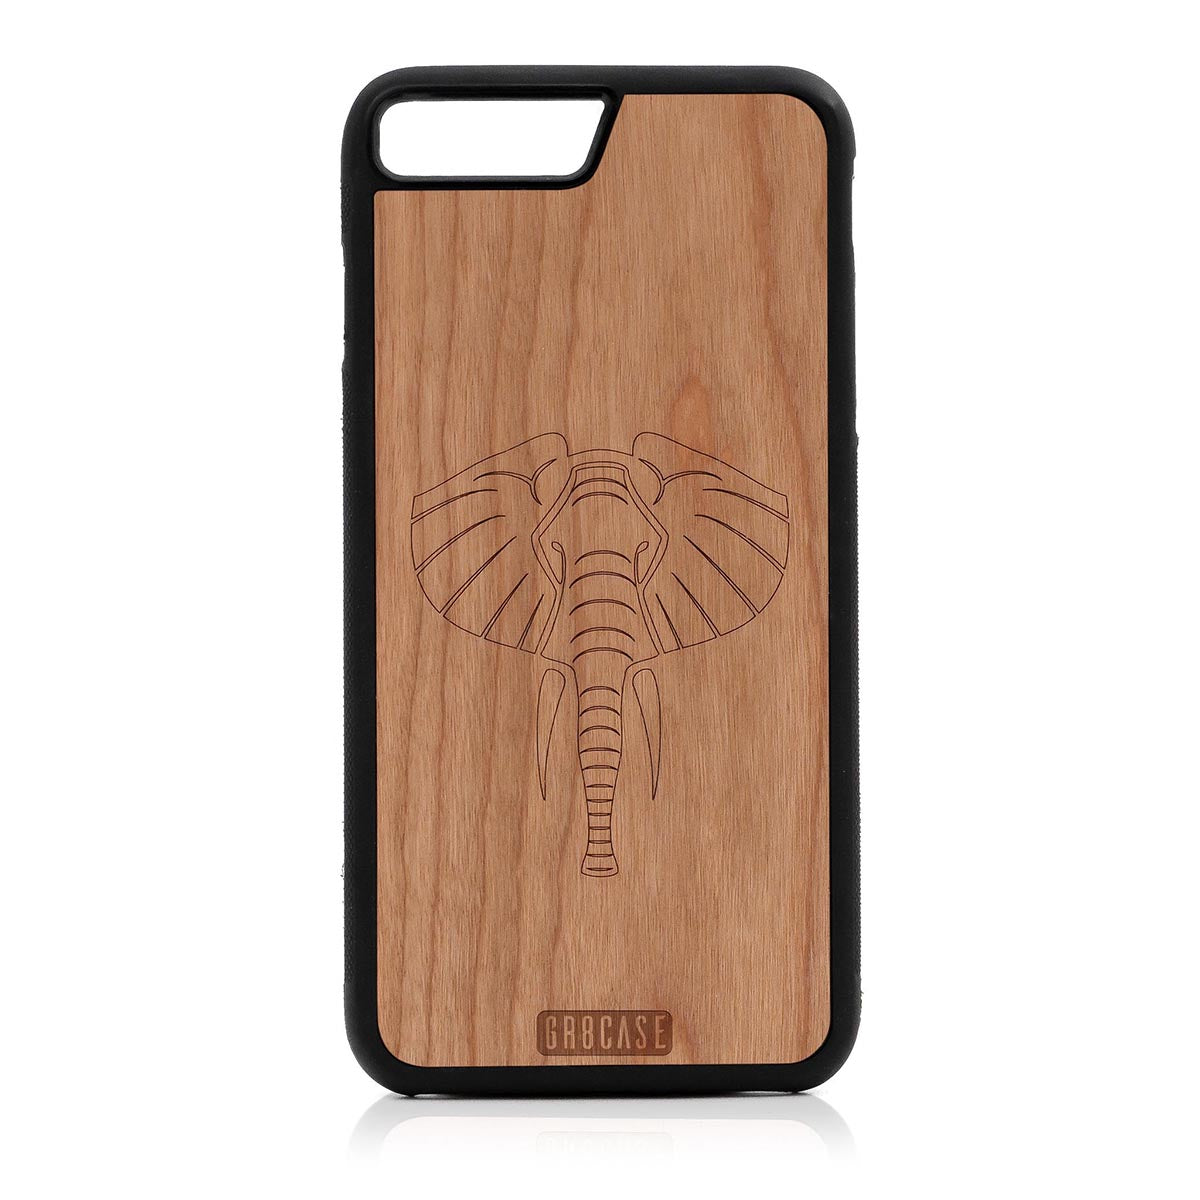 Elephant Design Wood Case For iPhone 7 Plus / 8 Plus by GR8CASE